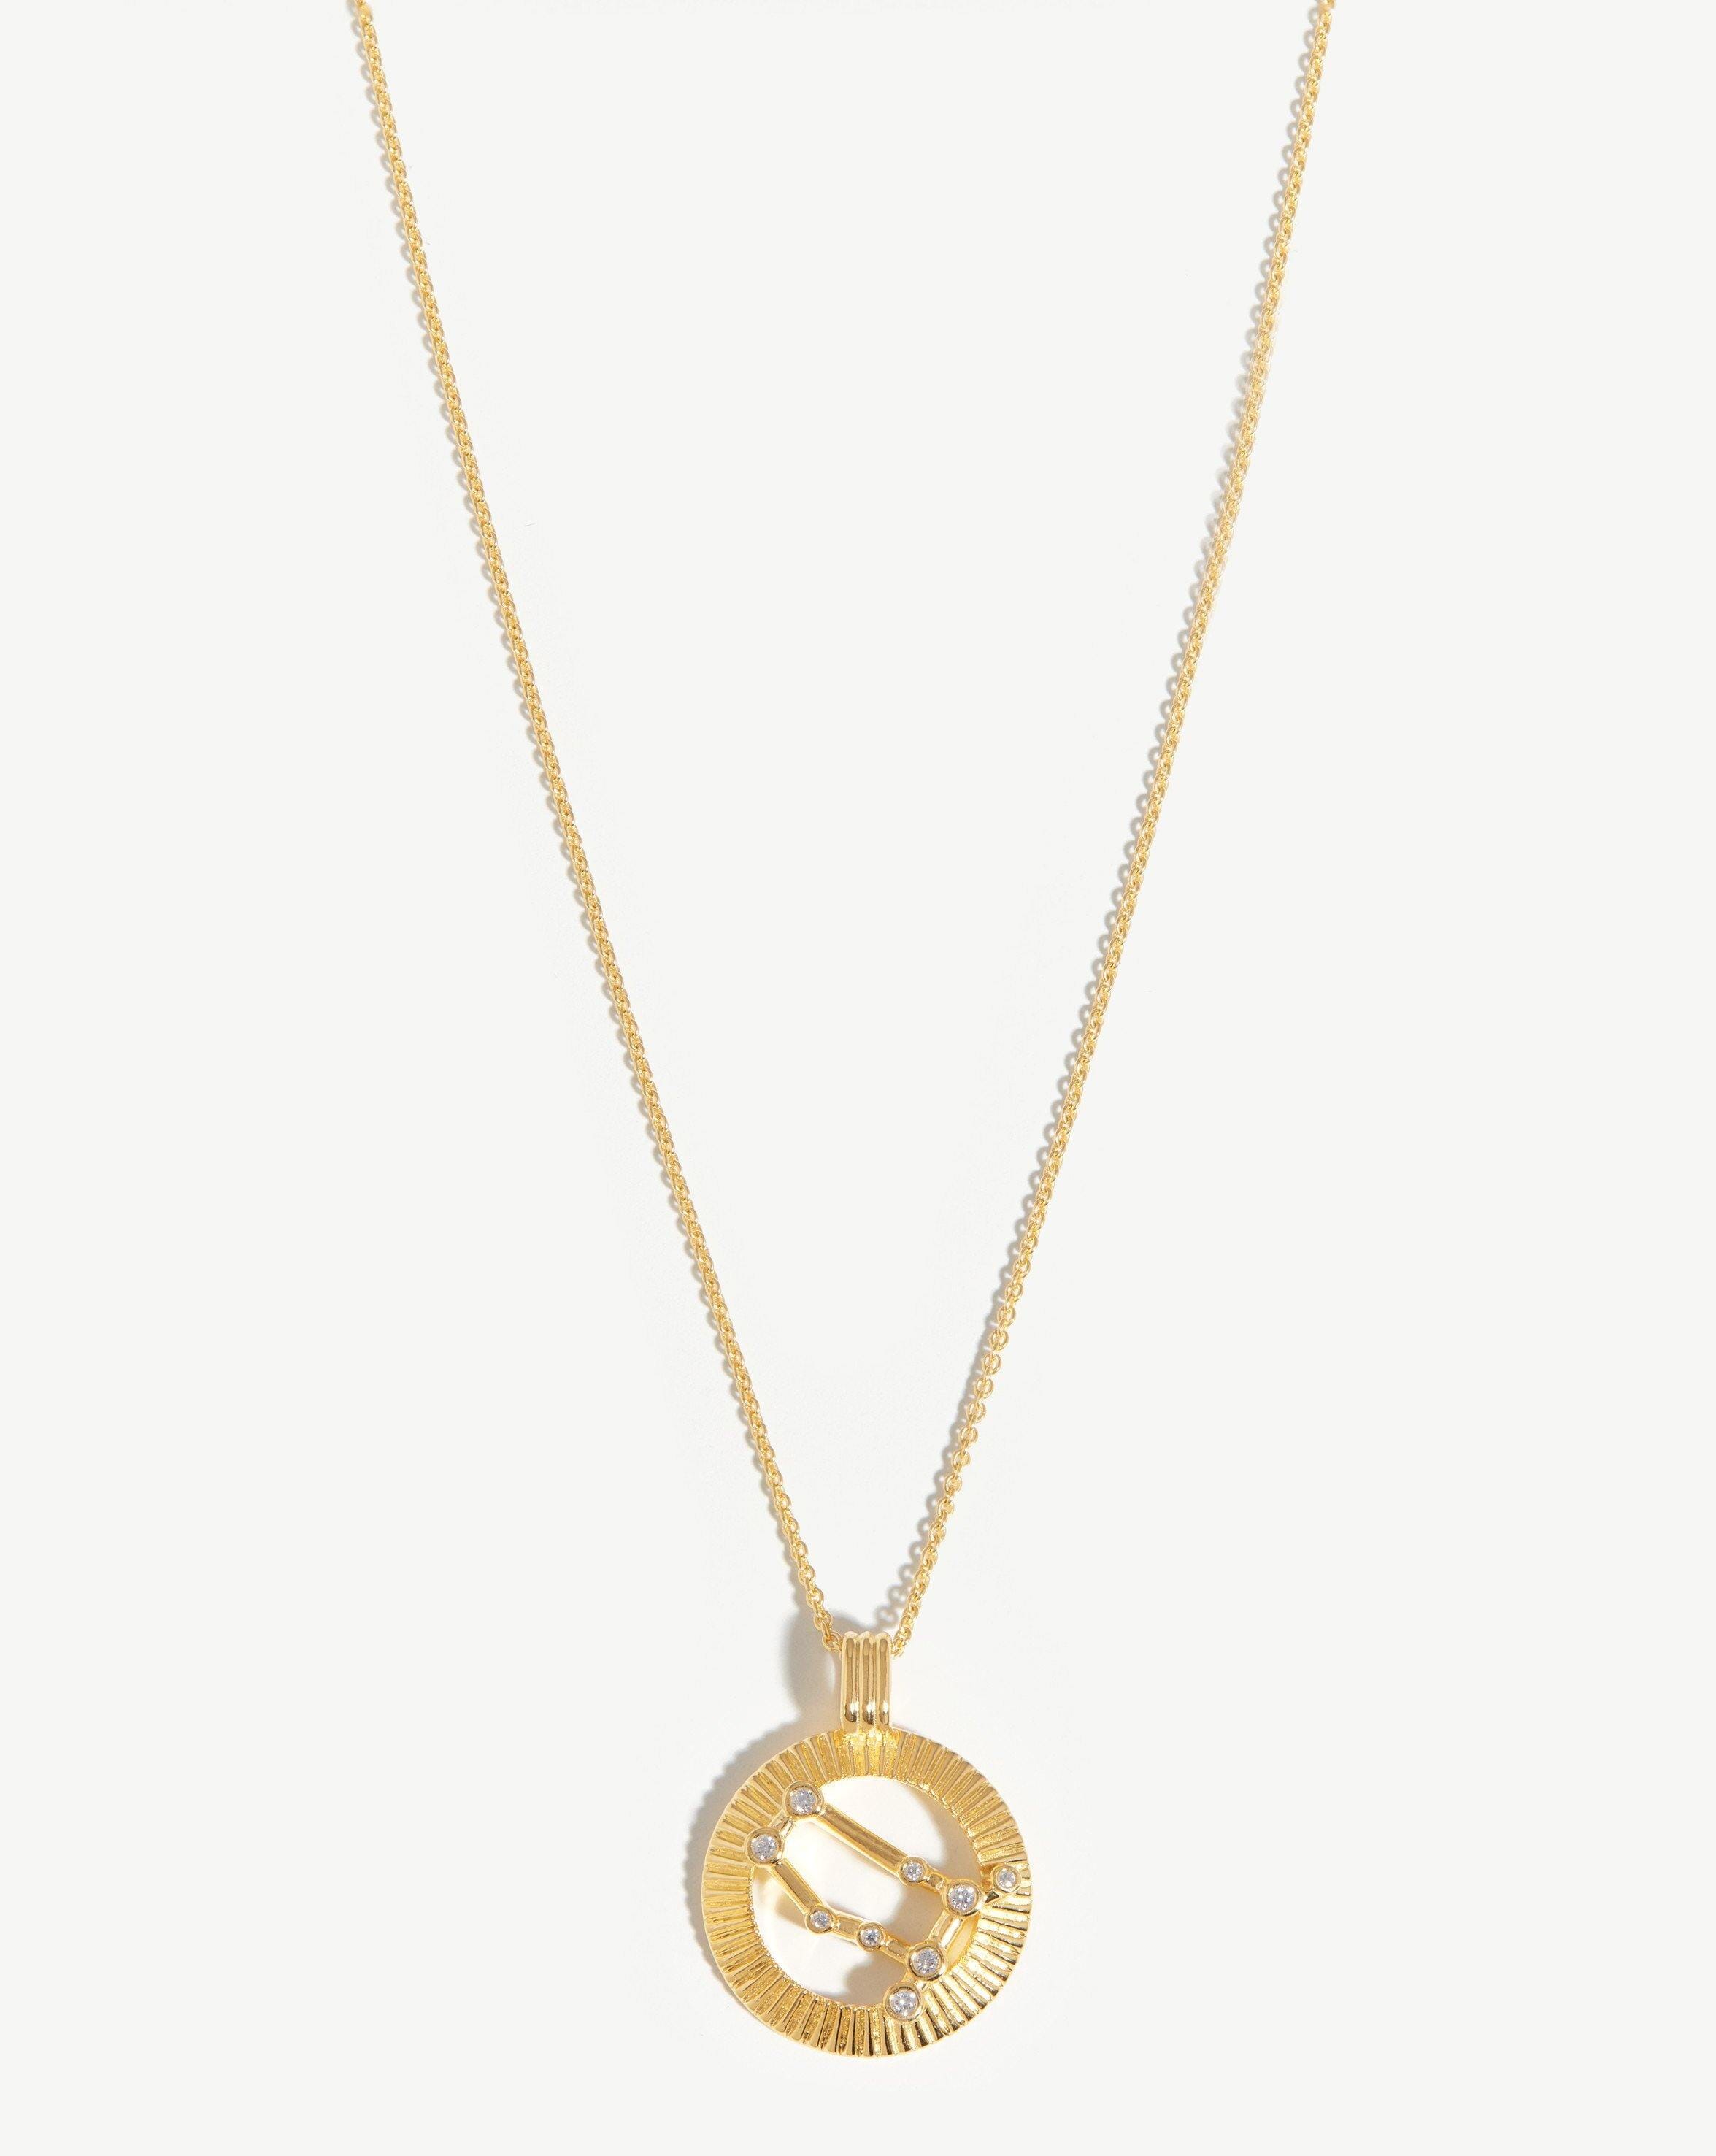 Zodiac Constellation Pendant Necklace - Gemini | 18ct Gold Plated Vermeil/Gemini Necklaces Missoma 